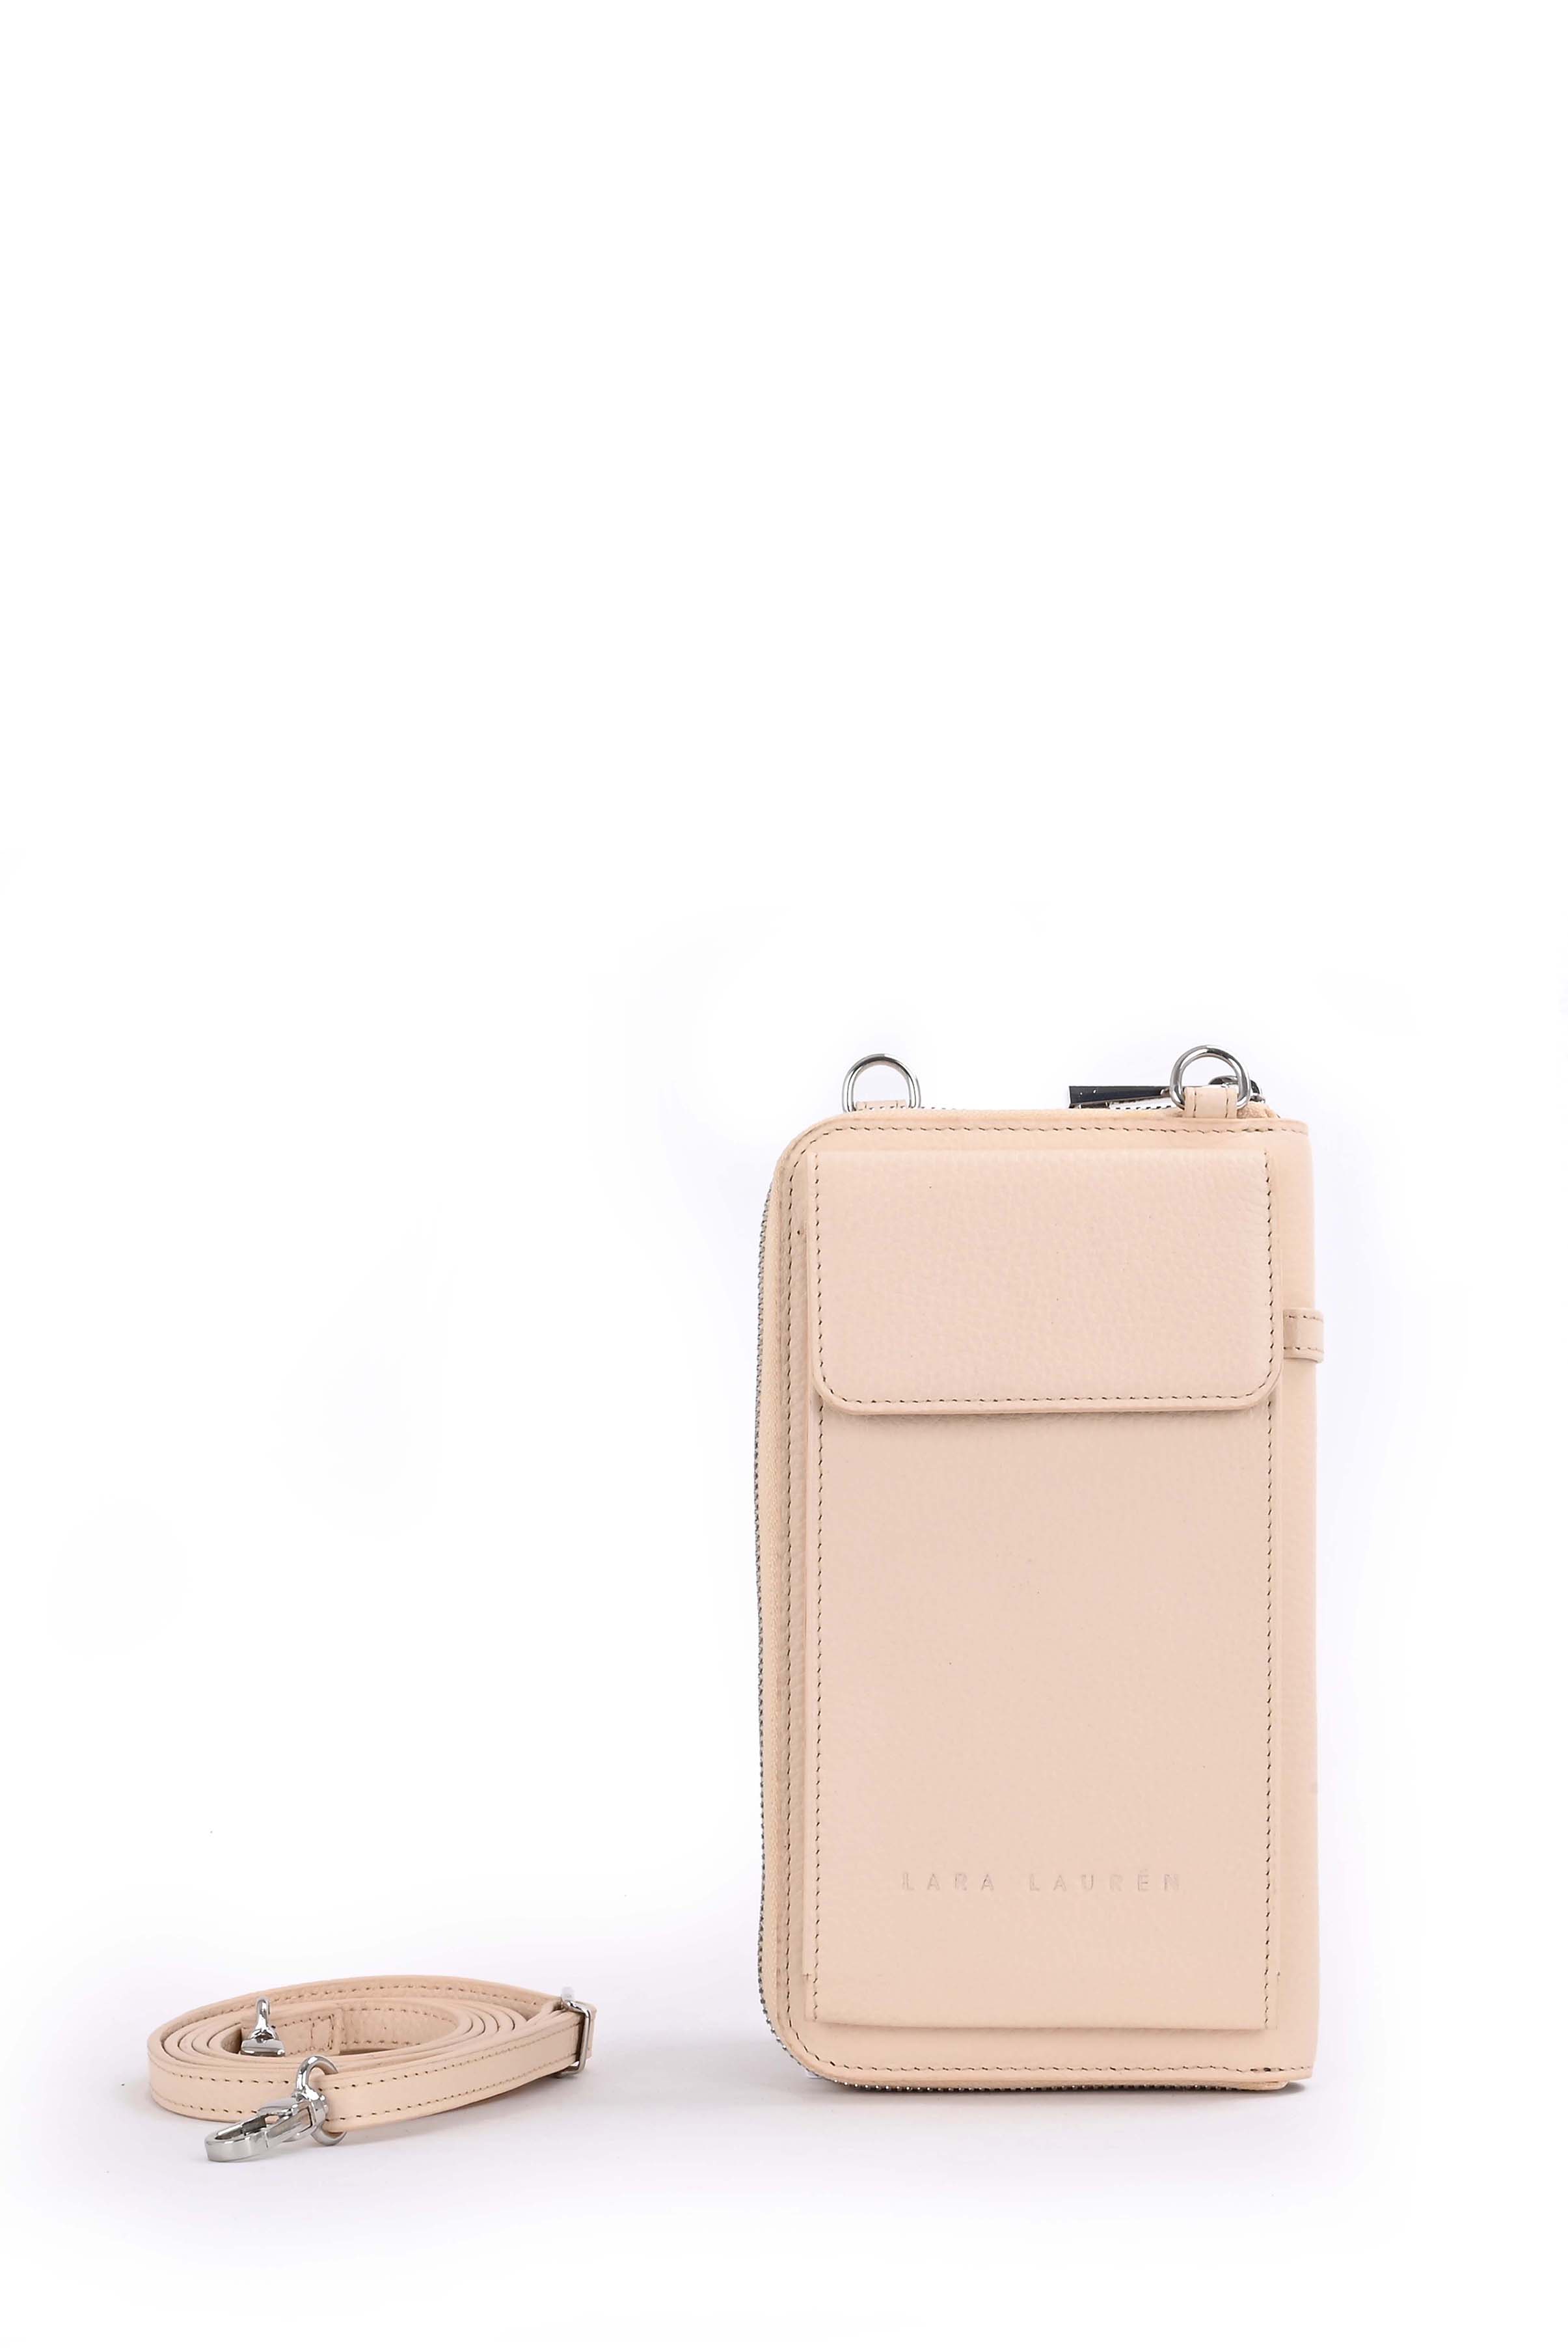 City Wallet A Mobilebag, ivory cream